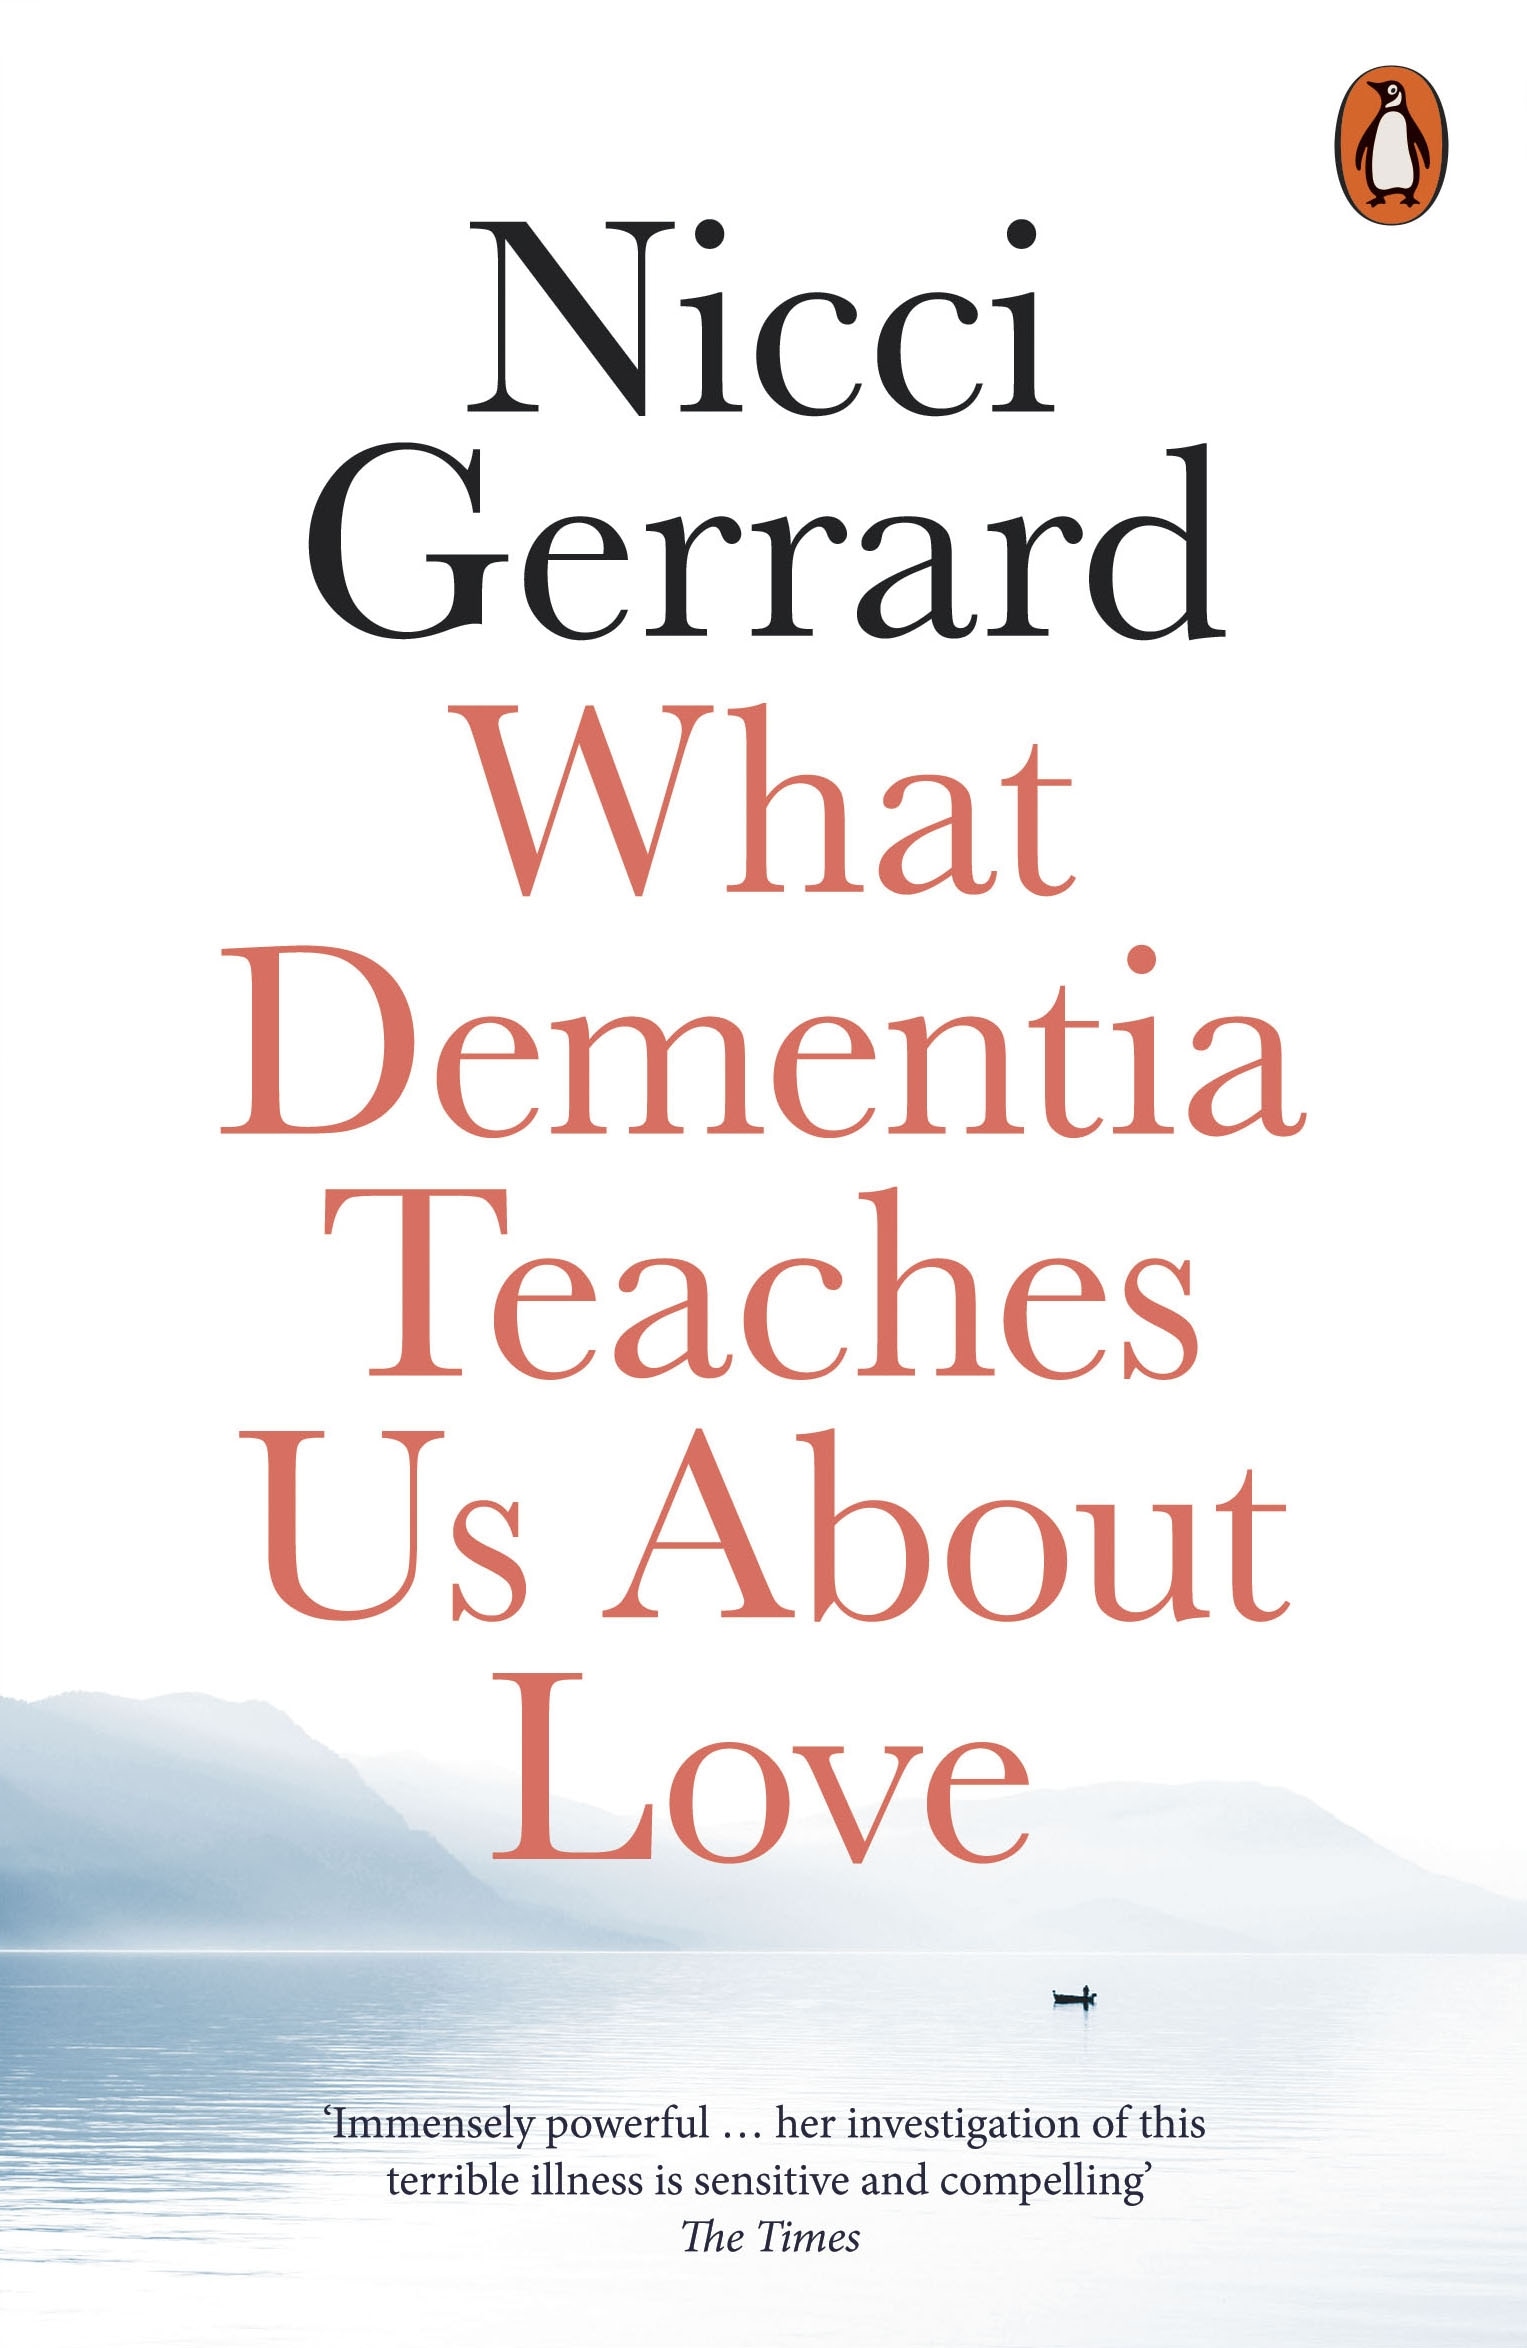 Book “What Dementia Teaches Us About Love” by Nicci Gerrard — March 5, 2020